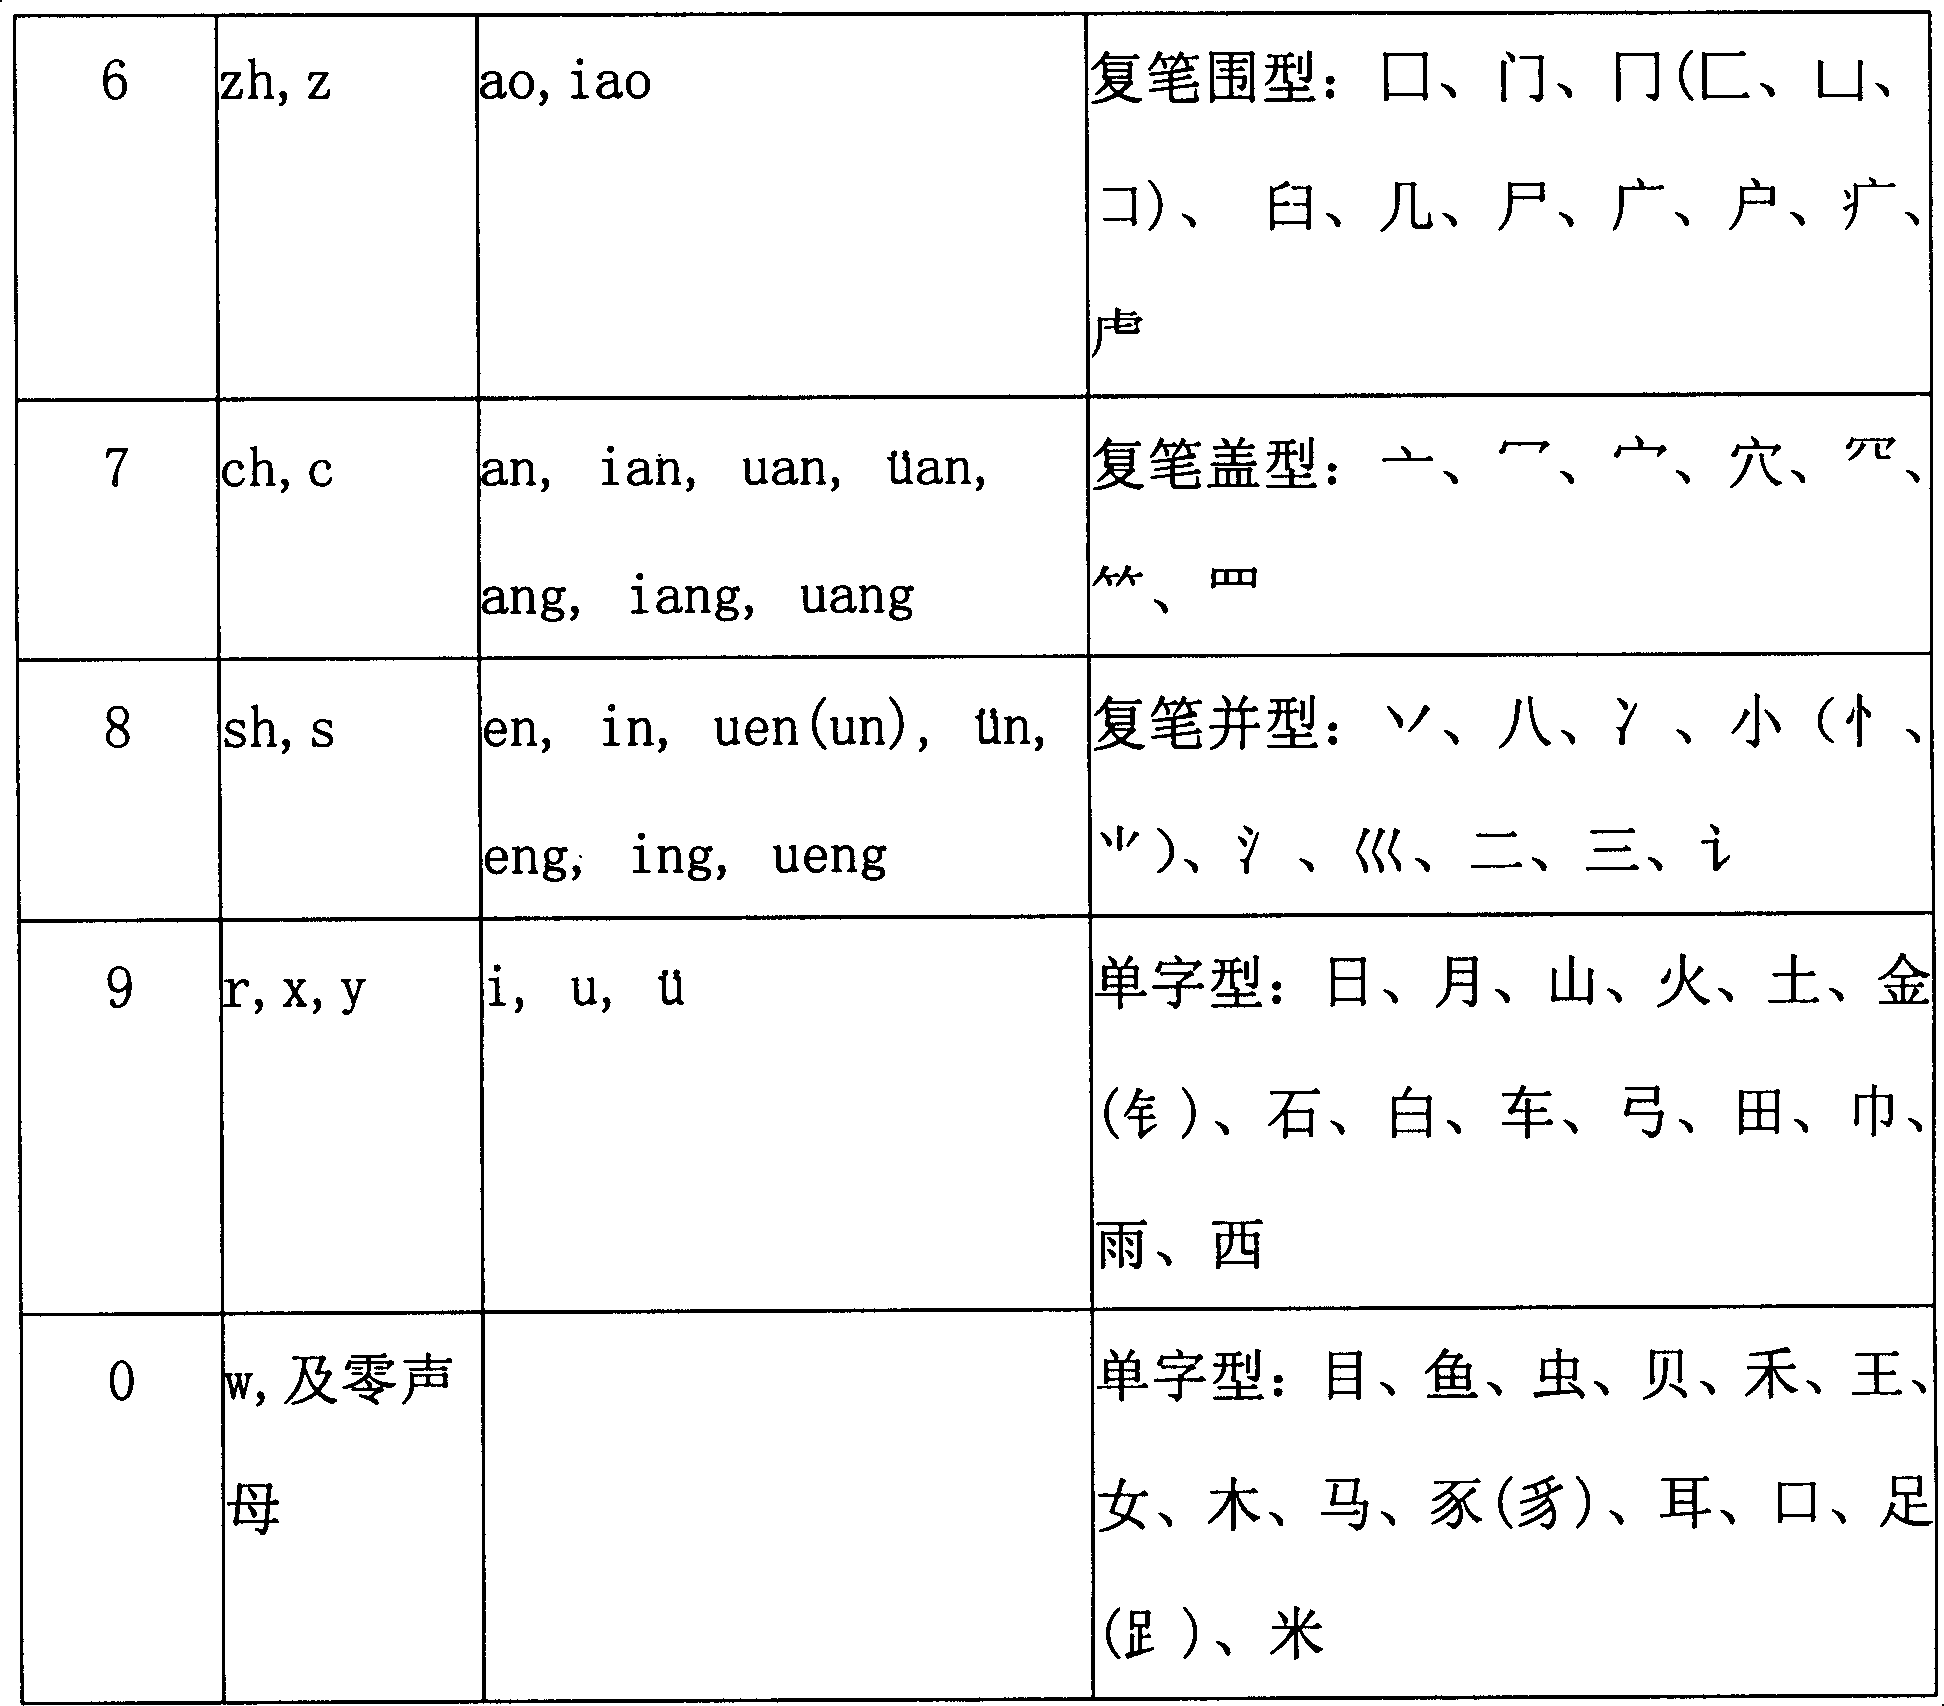 Sound-shape digital Chinese character input method